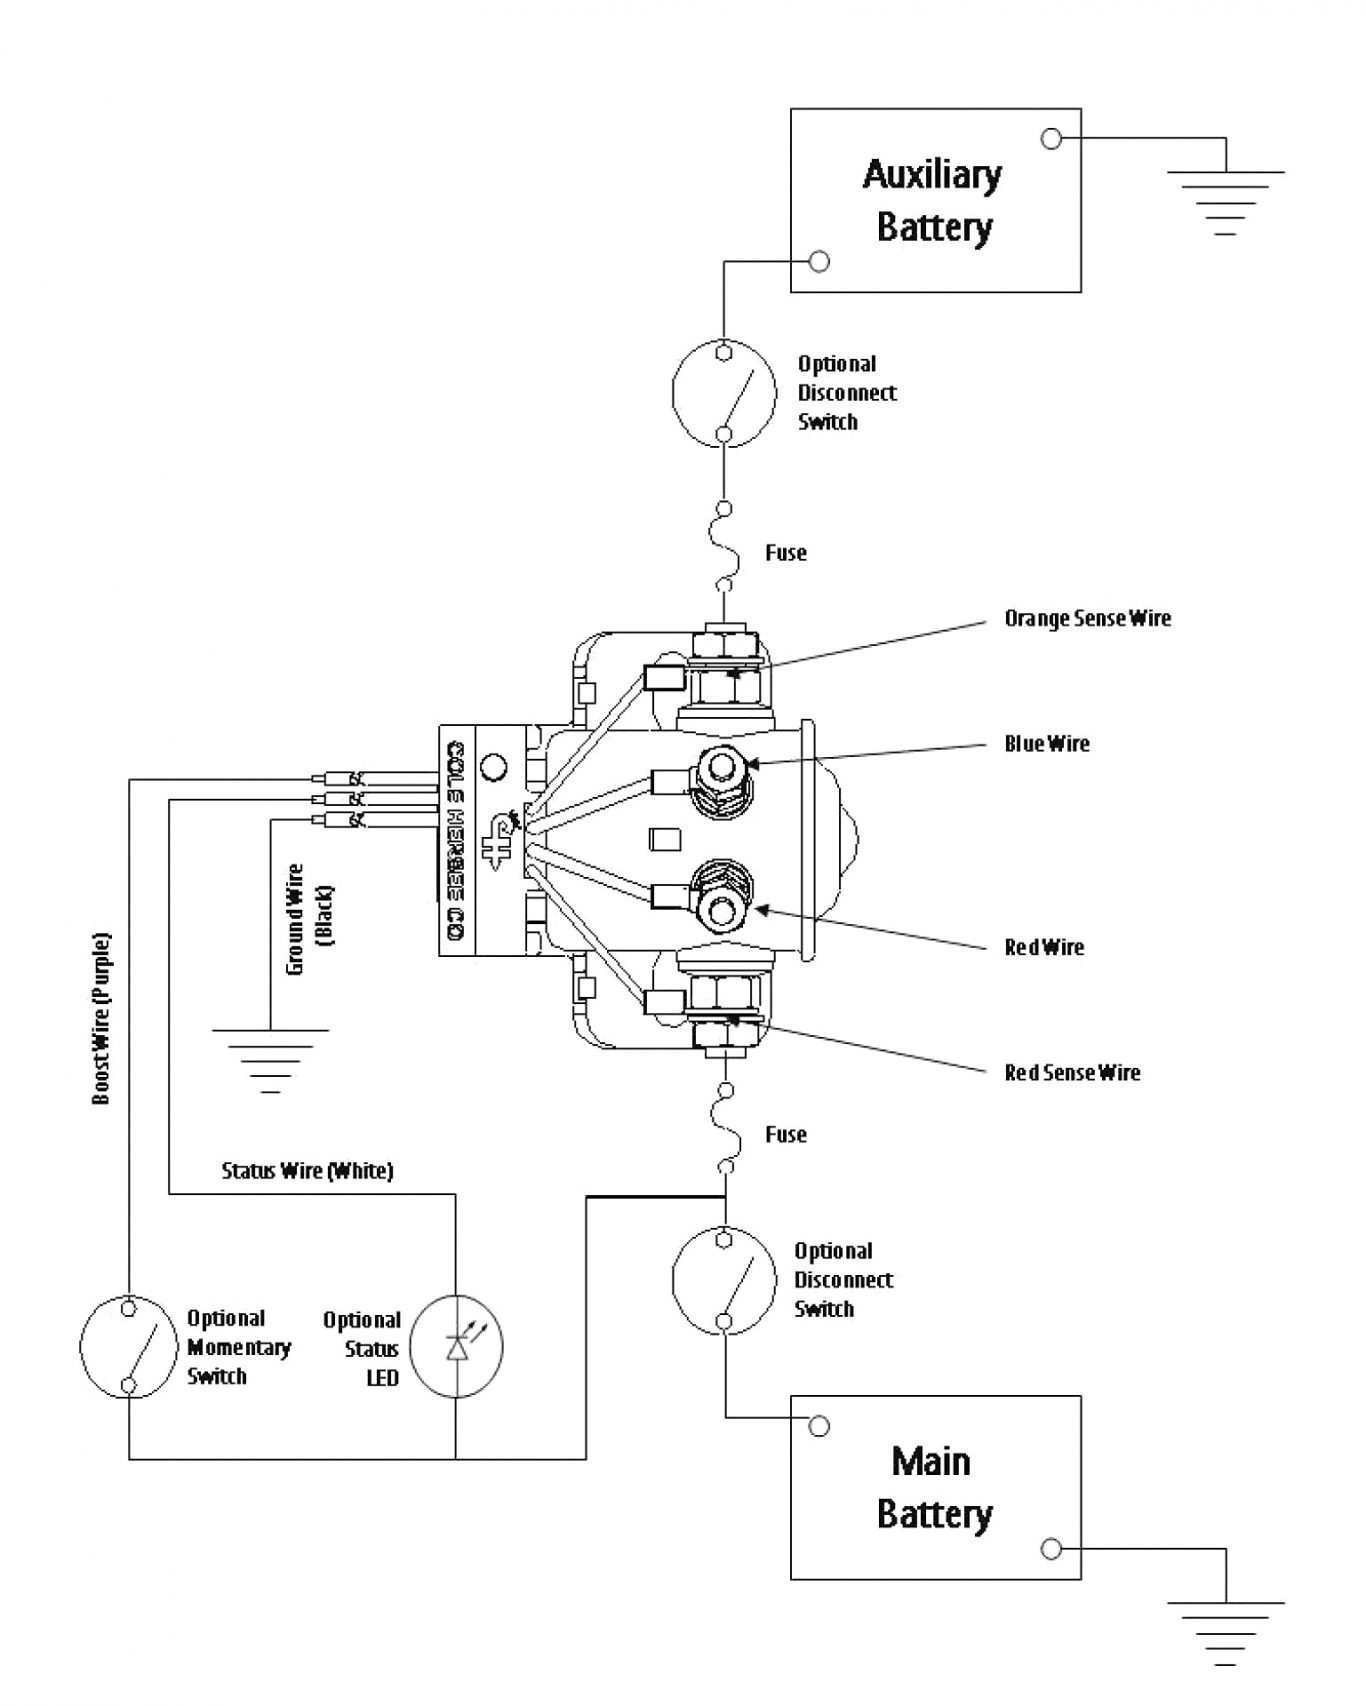 wiring diagram car audio system new boat dual battery wiring of boat stereo wiring diagram